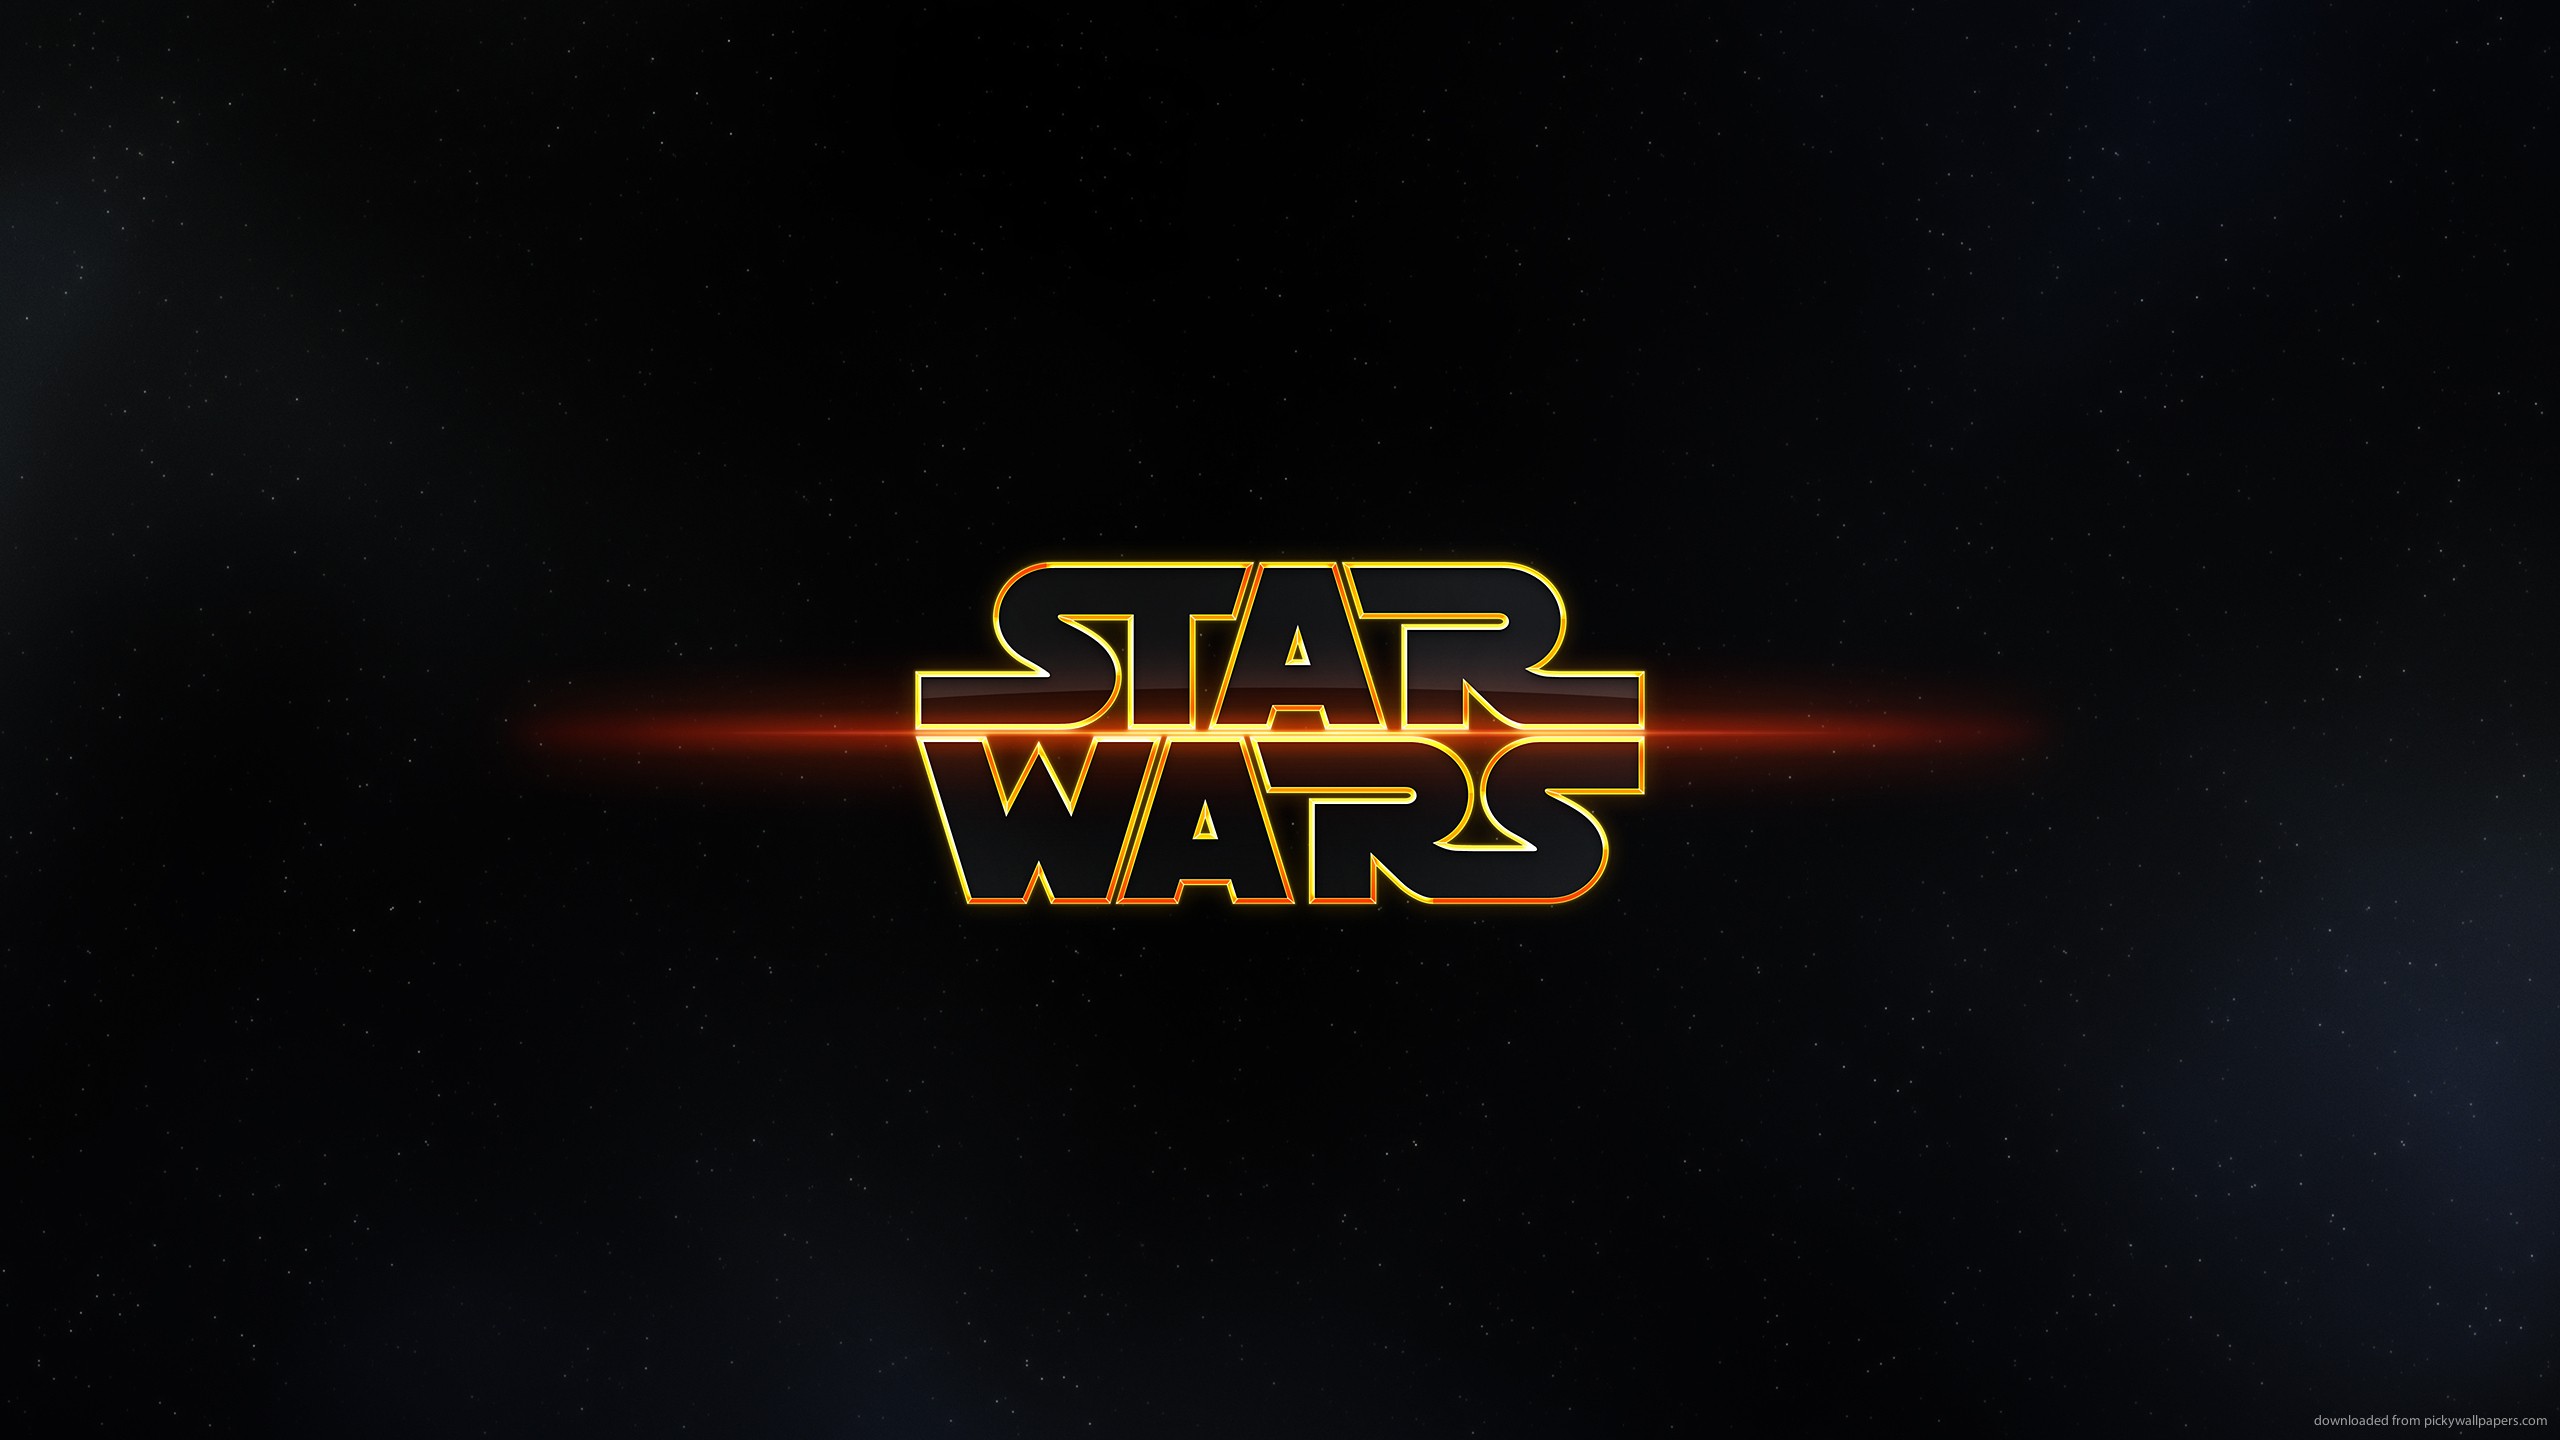 Star wars battlefront 1 free download